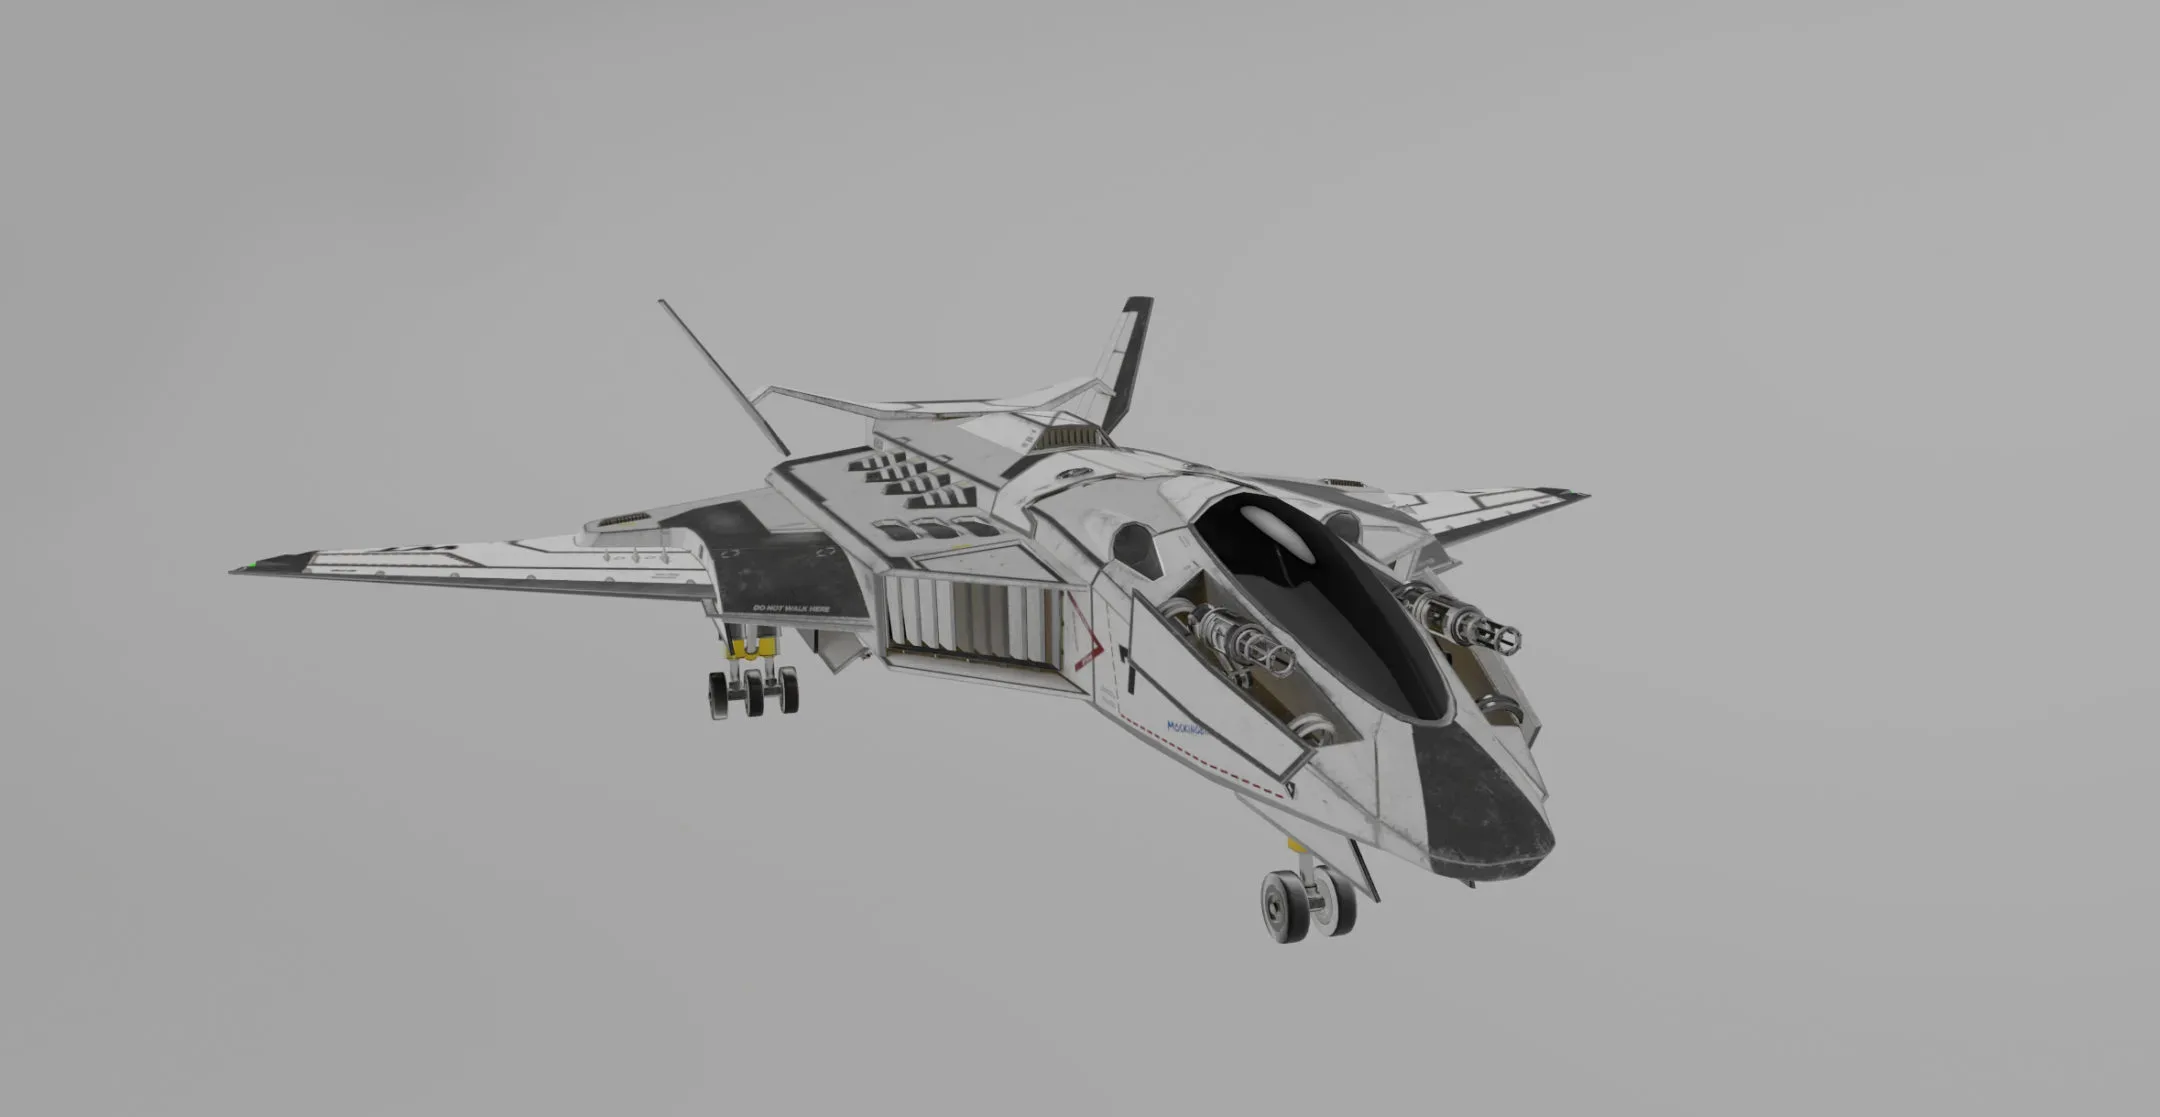 Jet Fighter